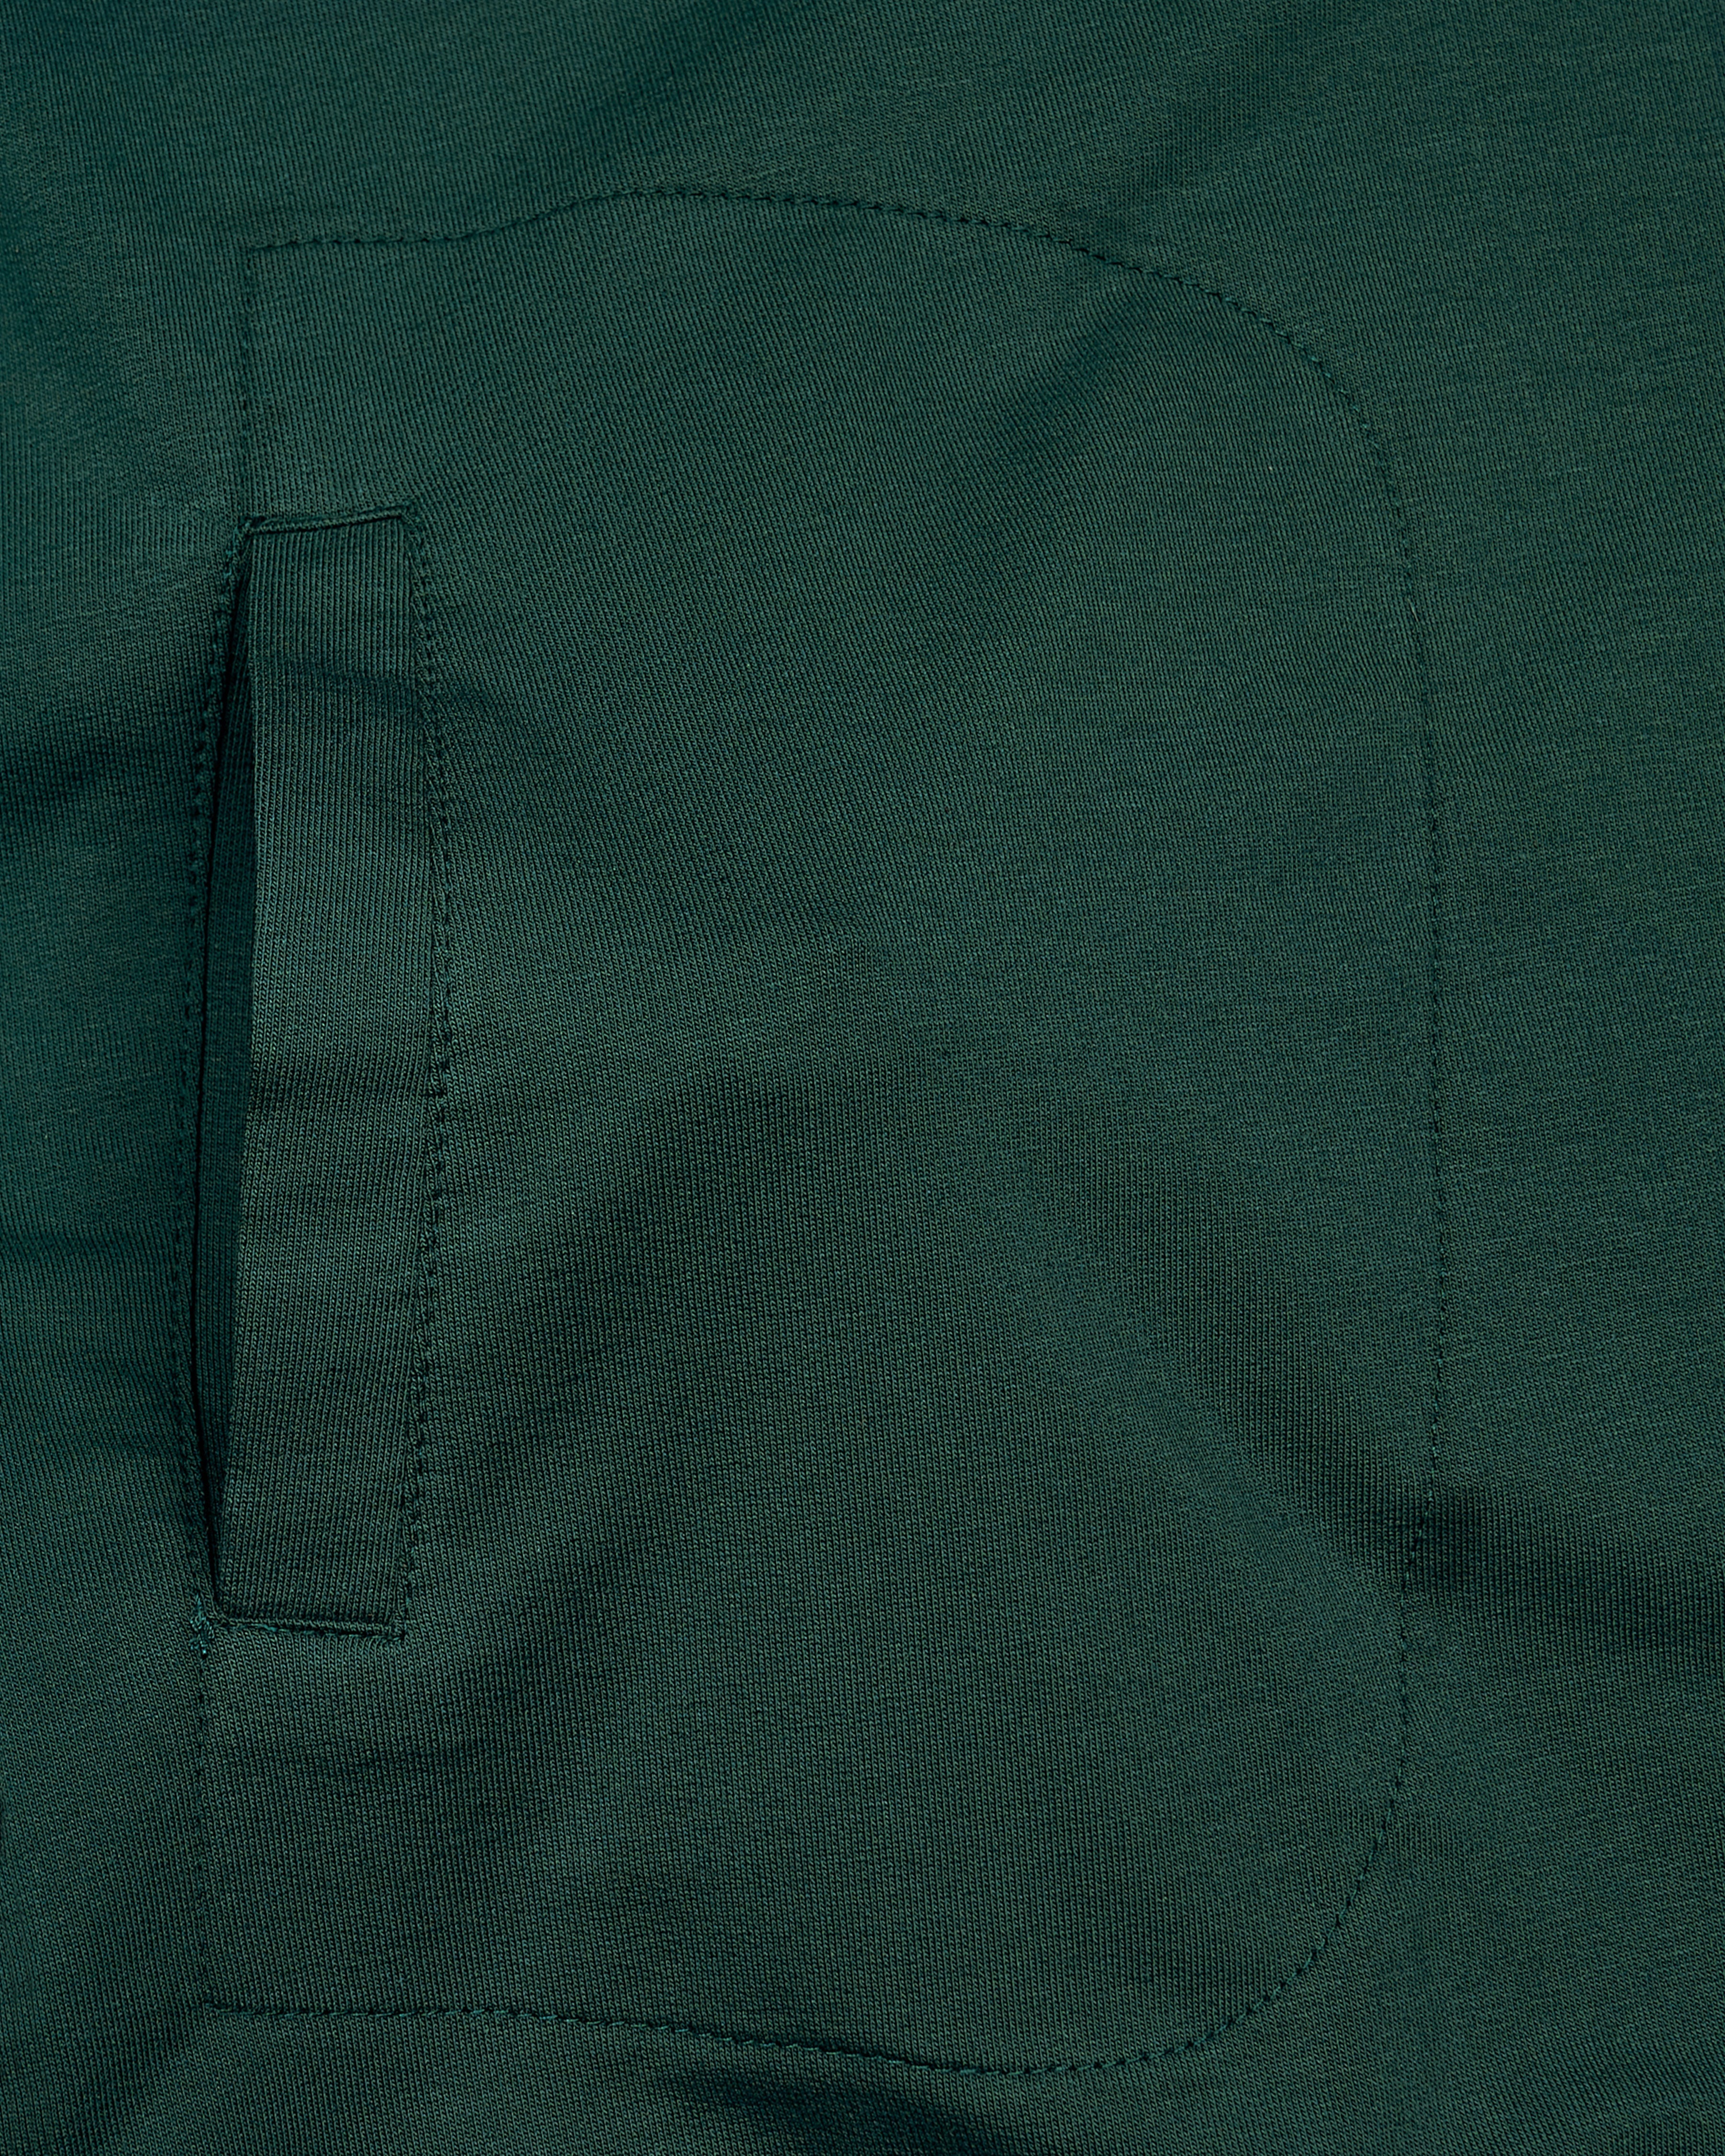 Everglade Green Zipper Closure Full Sleeve Premium Cotton Heavyweight Polo Sweatshirt TS678-S, TS678-M, TS678-L, TS678-XL, TS678-XXL